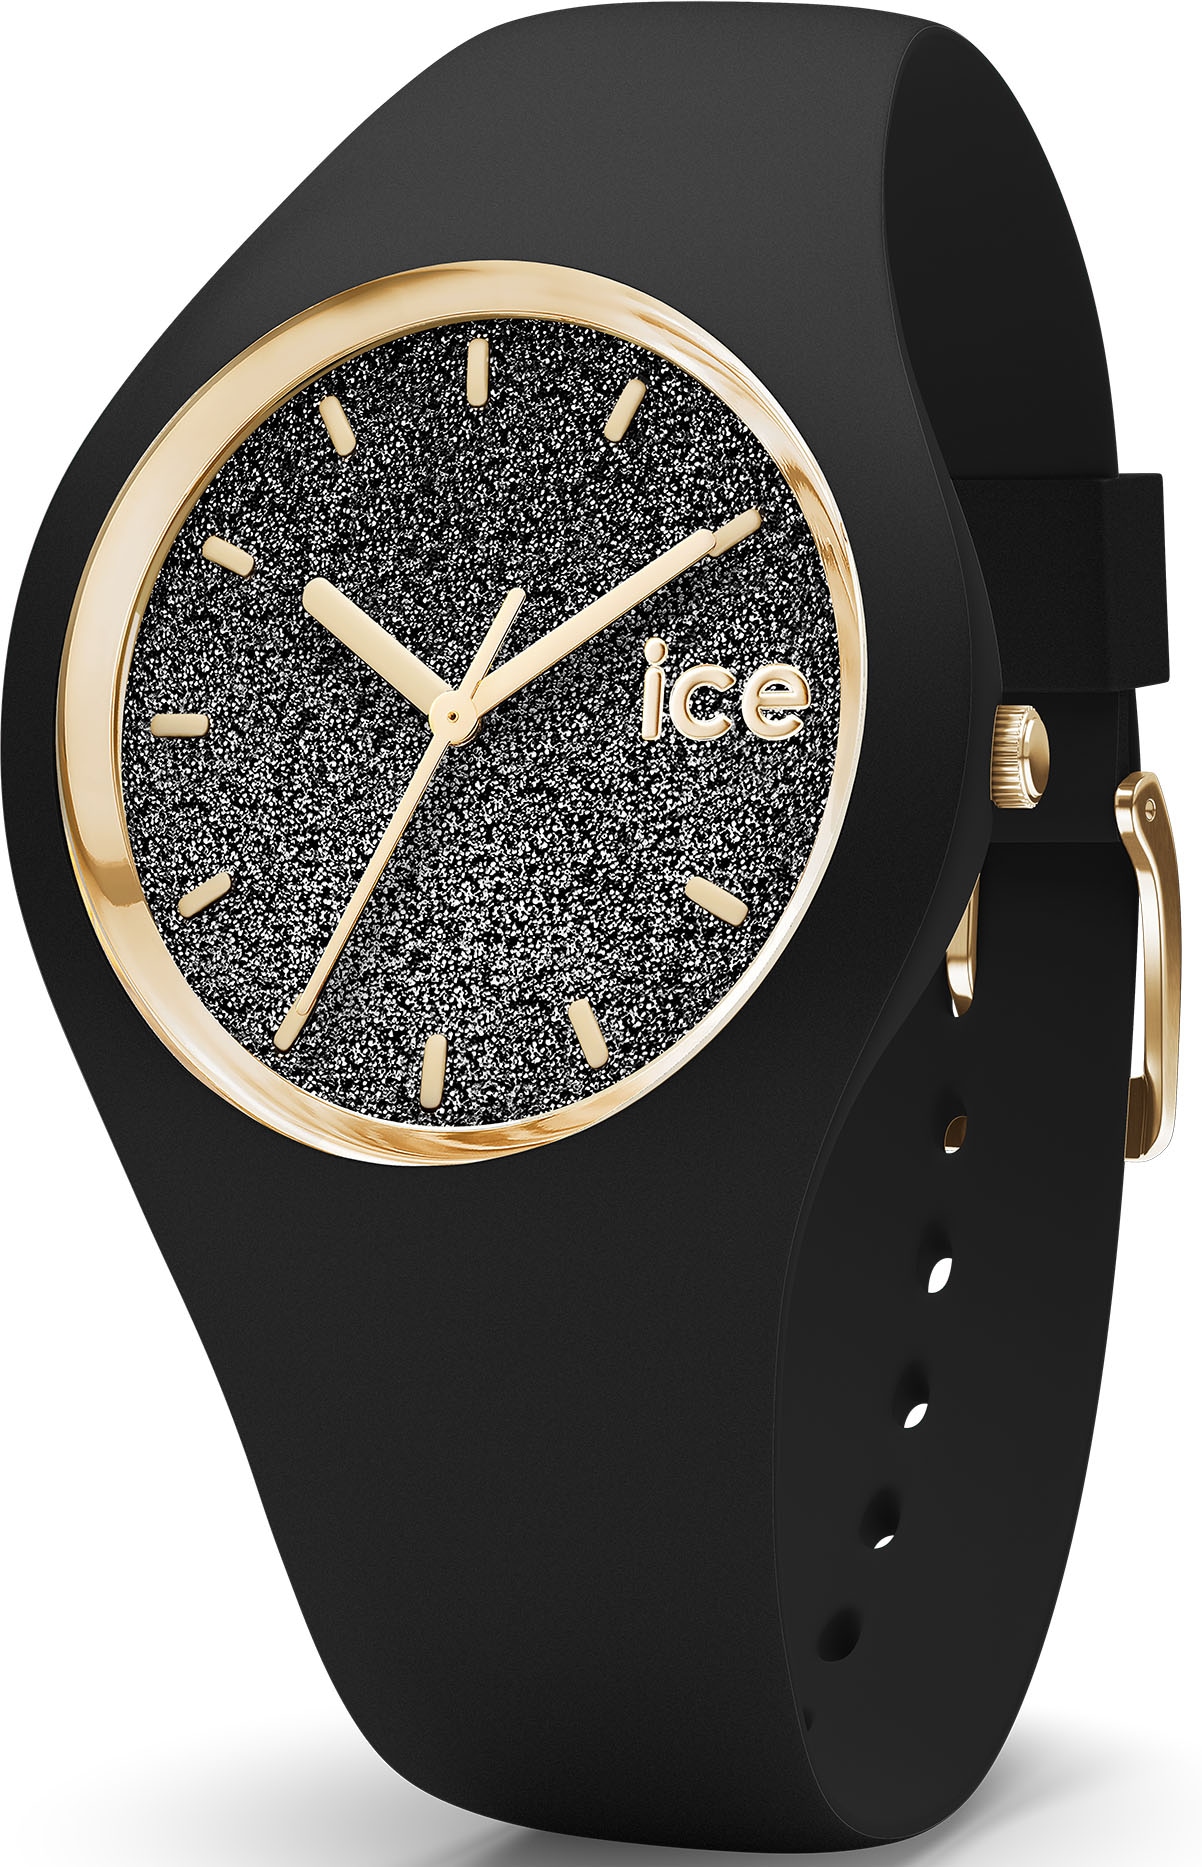 ice-watch Quarzuhr »ICE glitter, 001349«